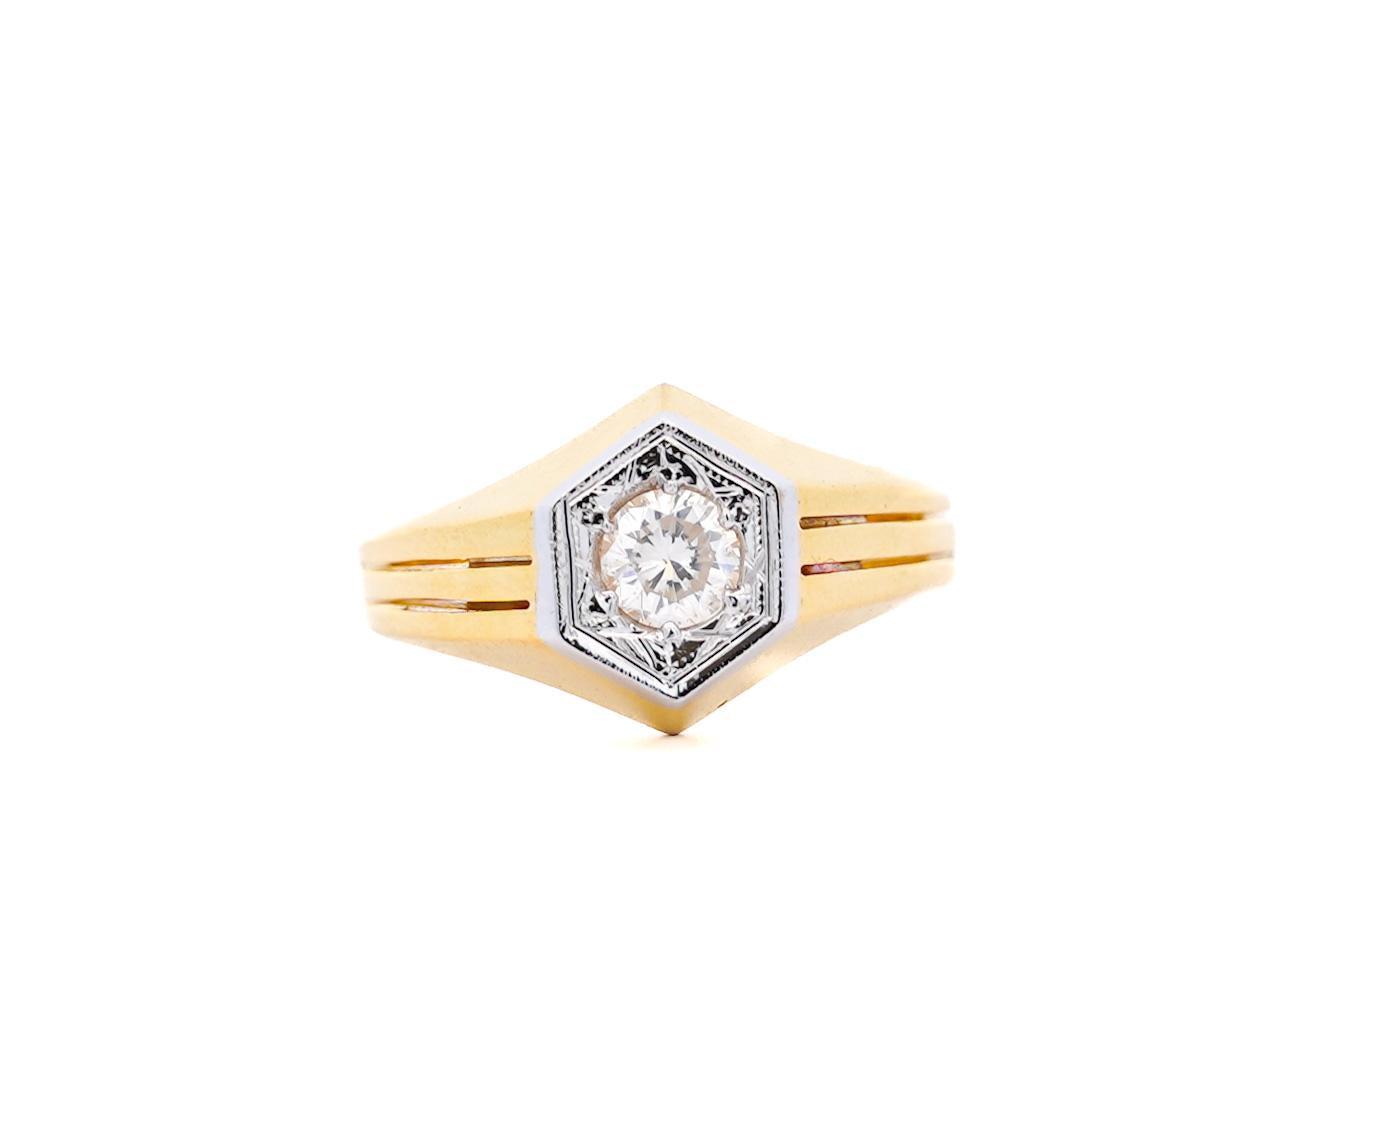 2 Carat Round Diamond Solitaire Unisex Ring in 14K Yellow Gold